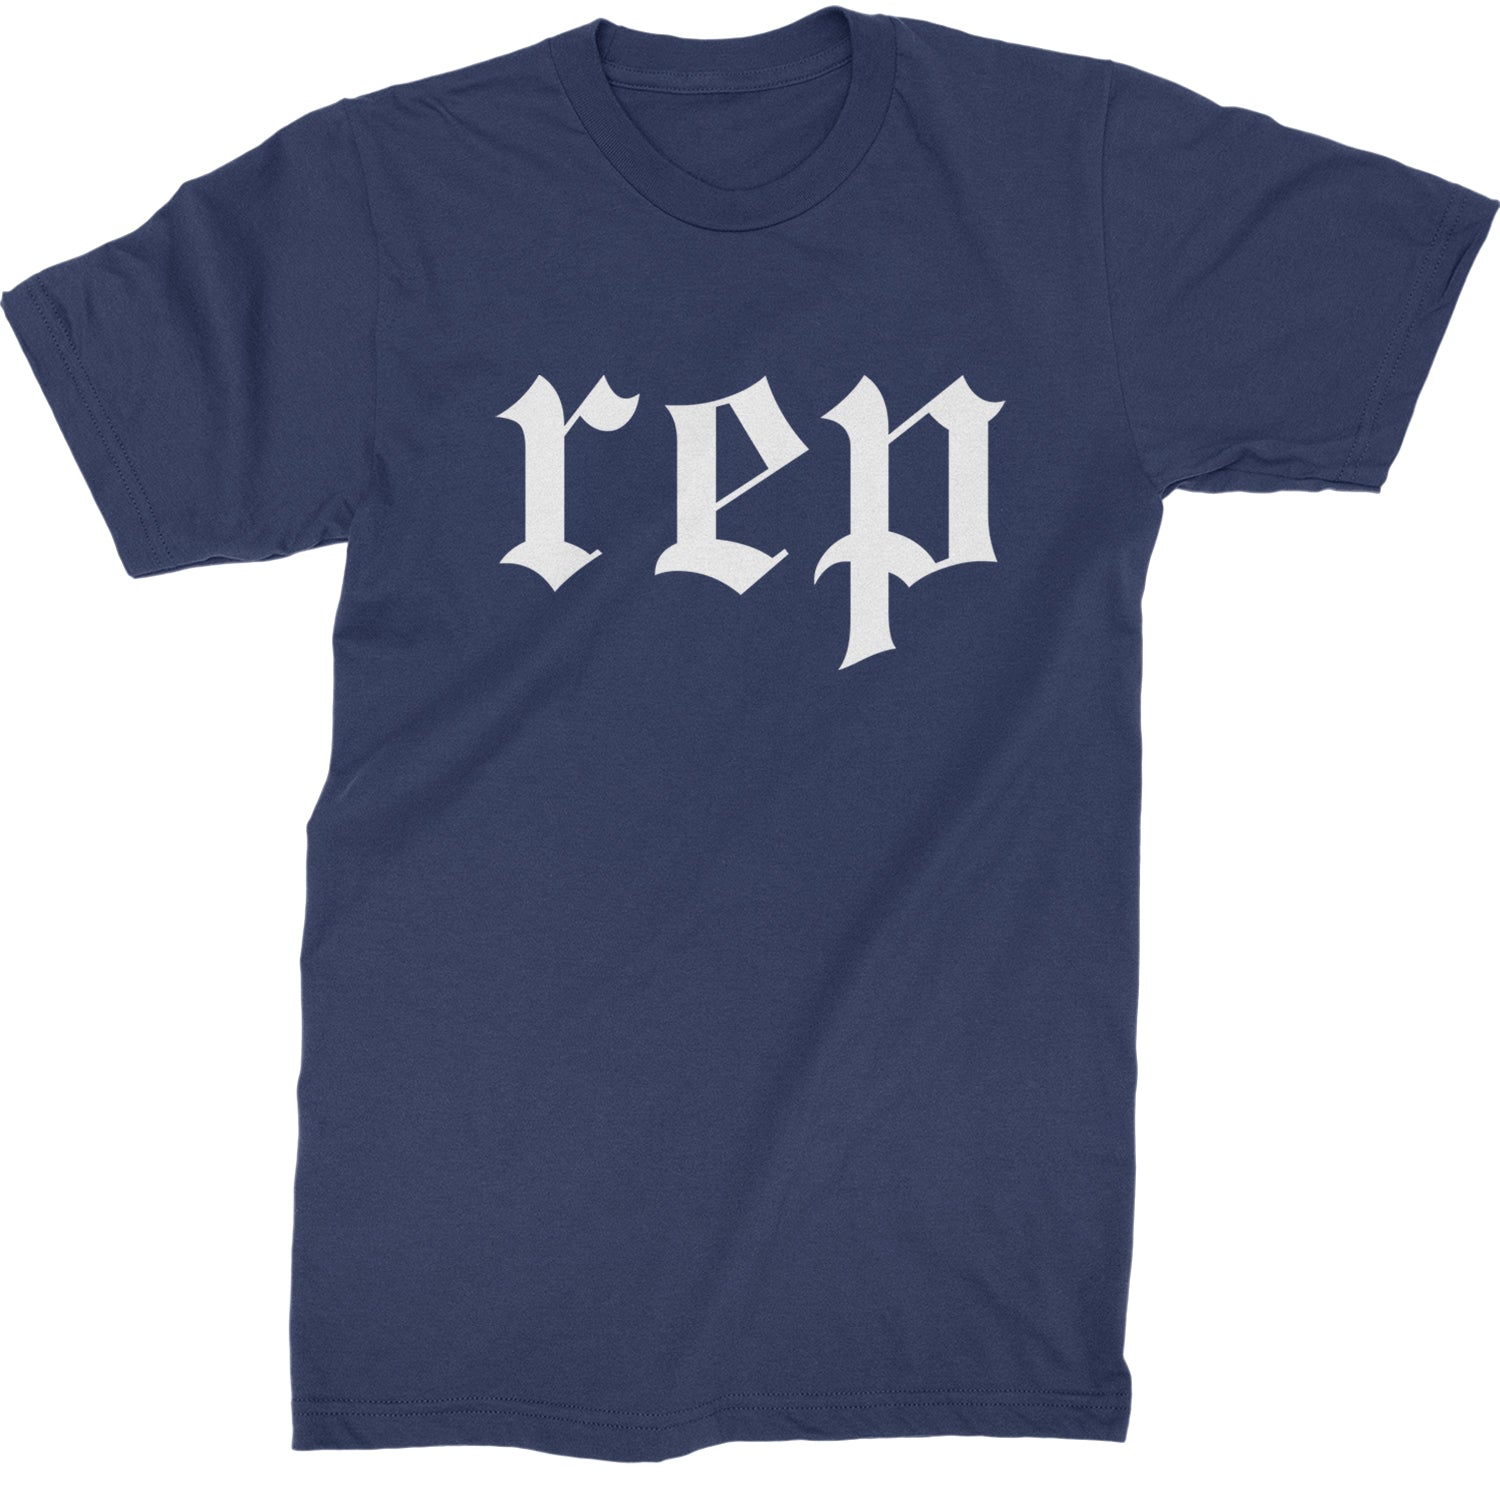 REP Reputation Eras Music Lover Gift Fan Favorite Mens T-shirt Navy Blue